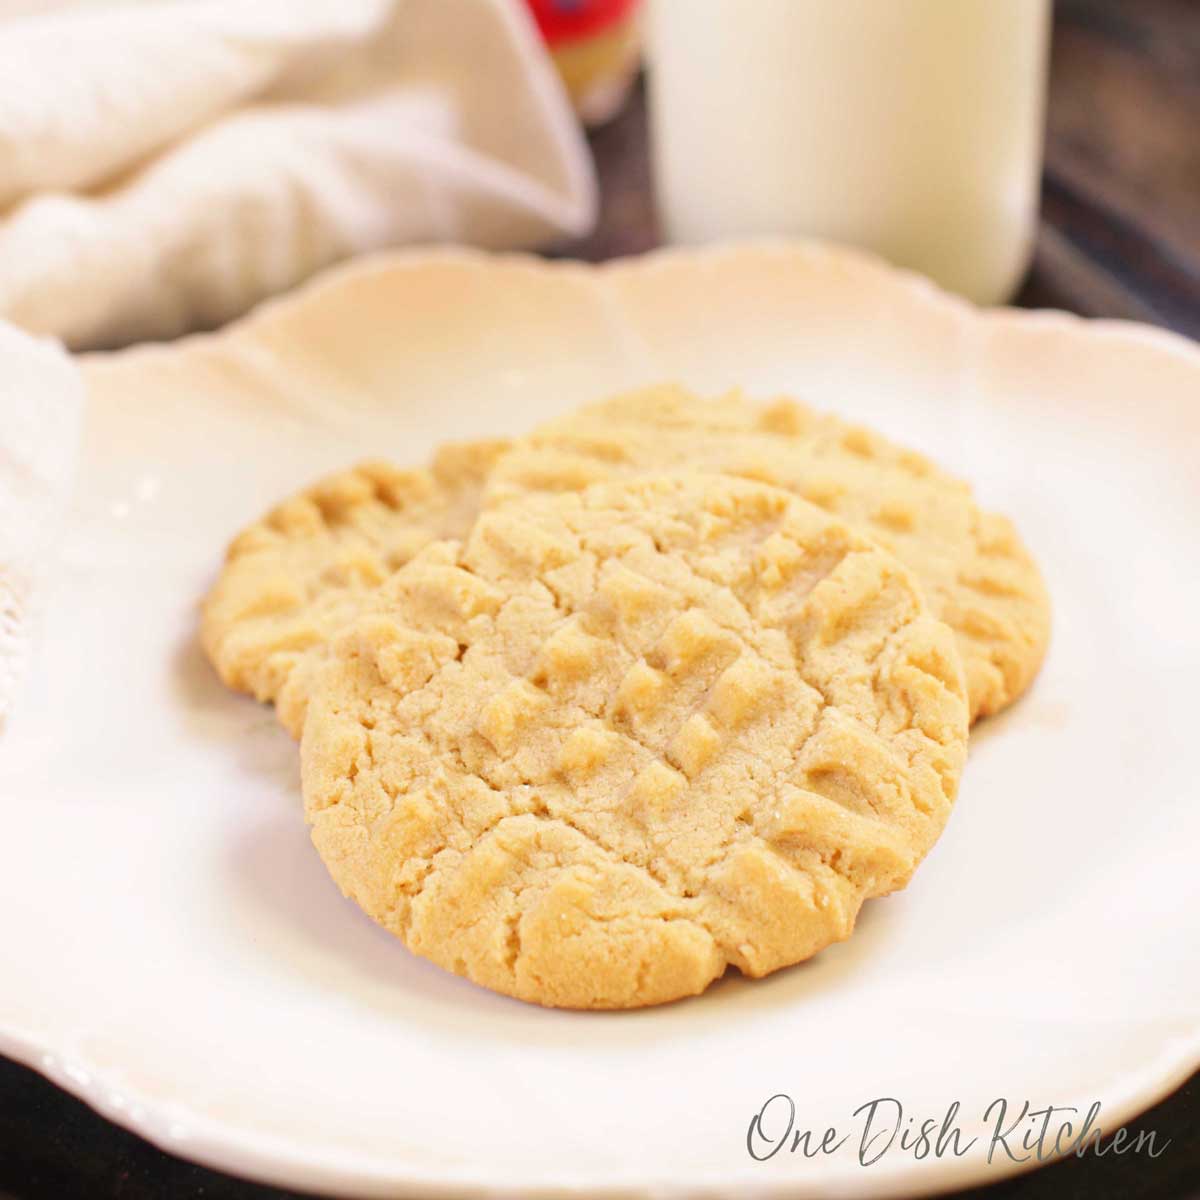 https://onedishkitchen.com/wp-content/uploads/2020/04/peanut-butter-cookies-one-dish-kitchen-square-1200.jpg